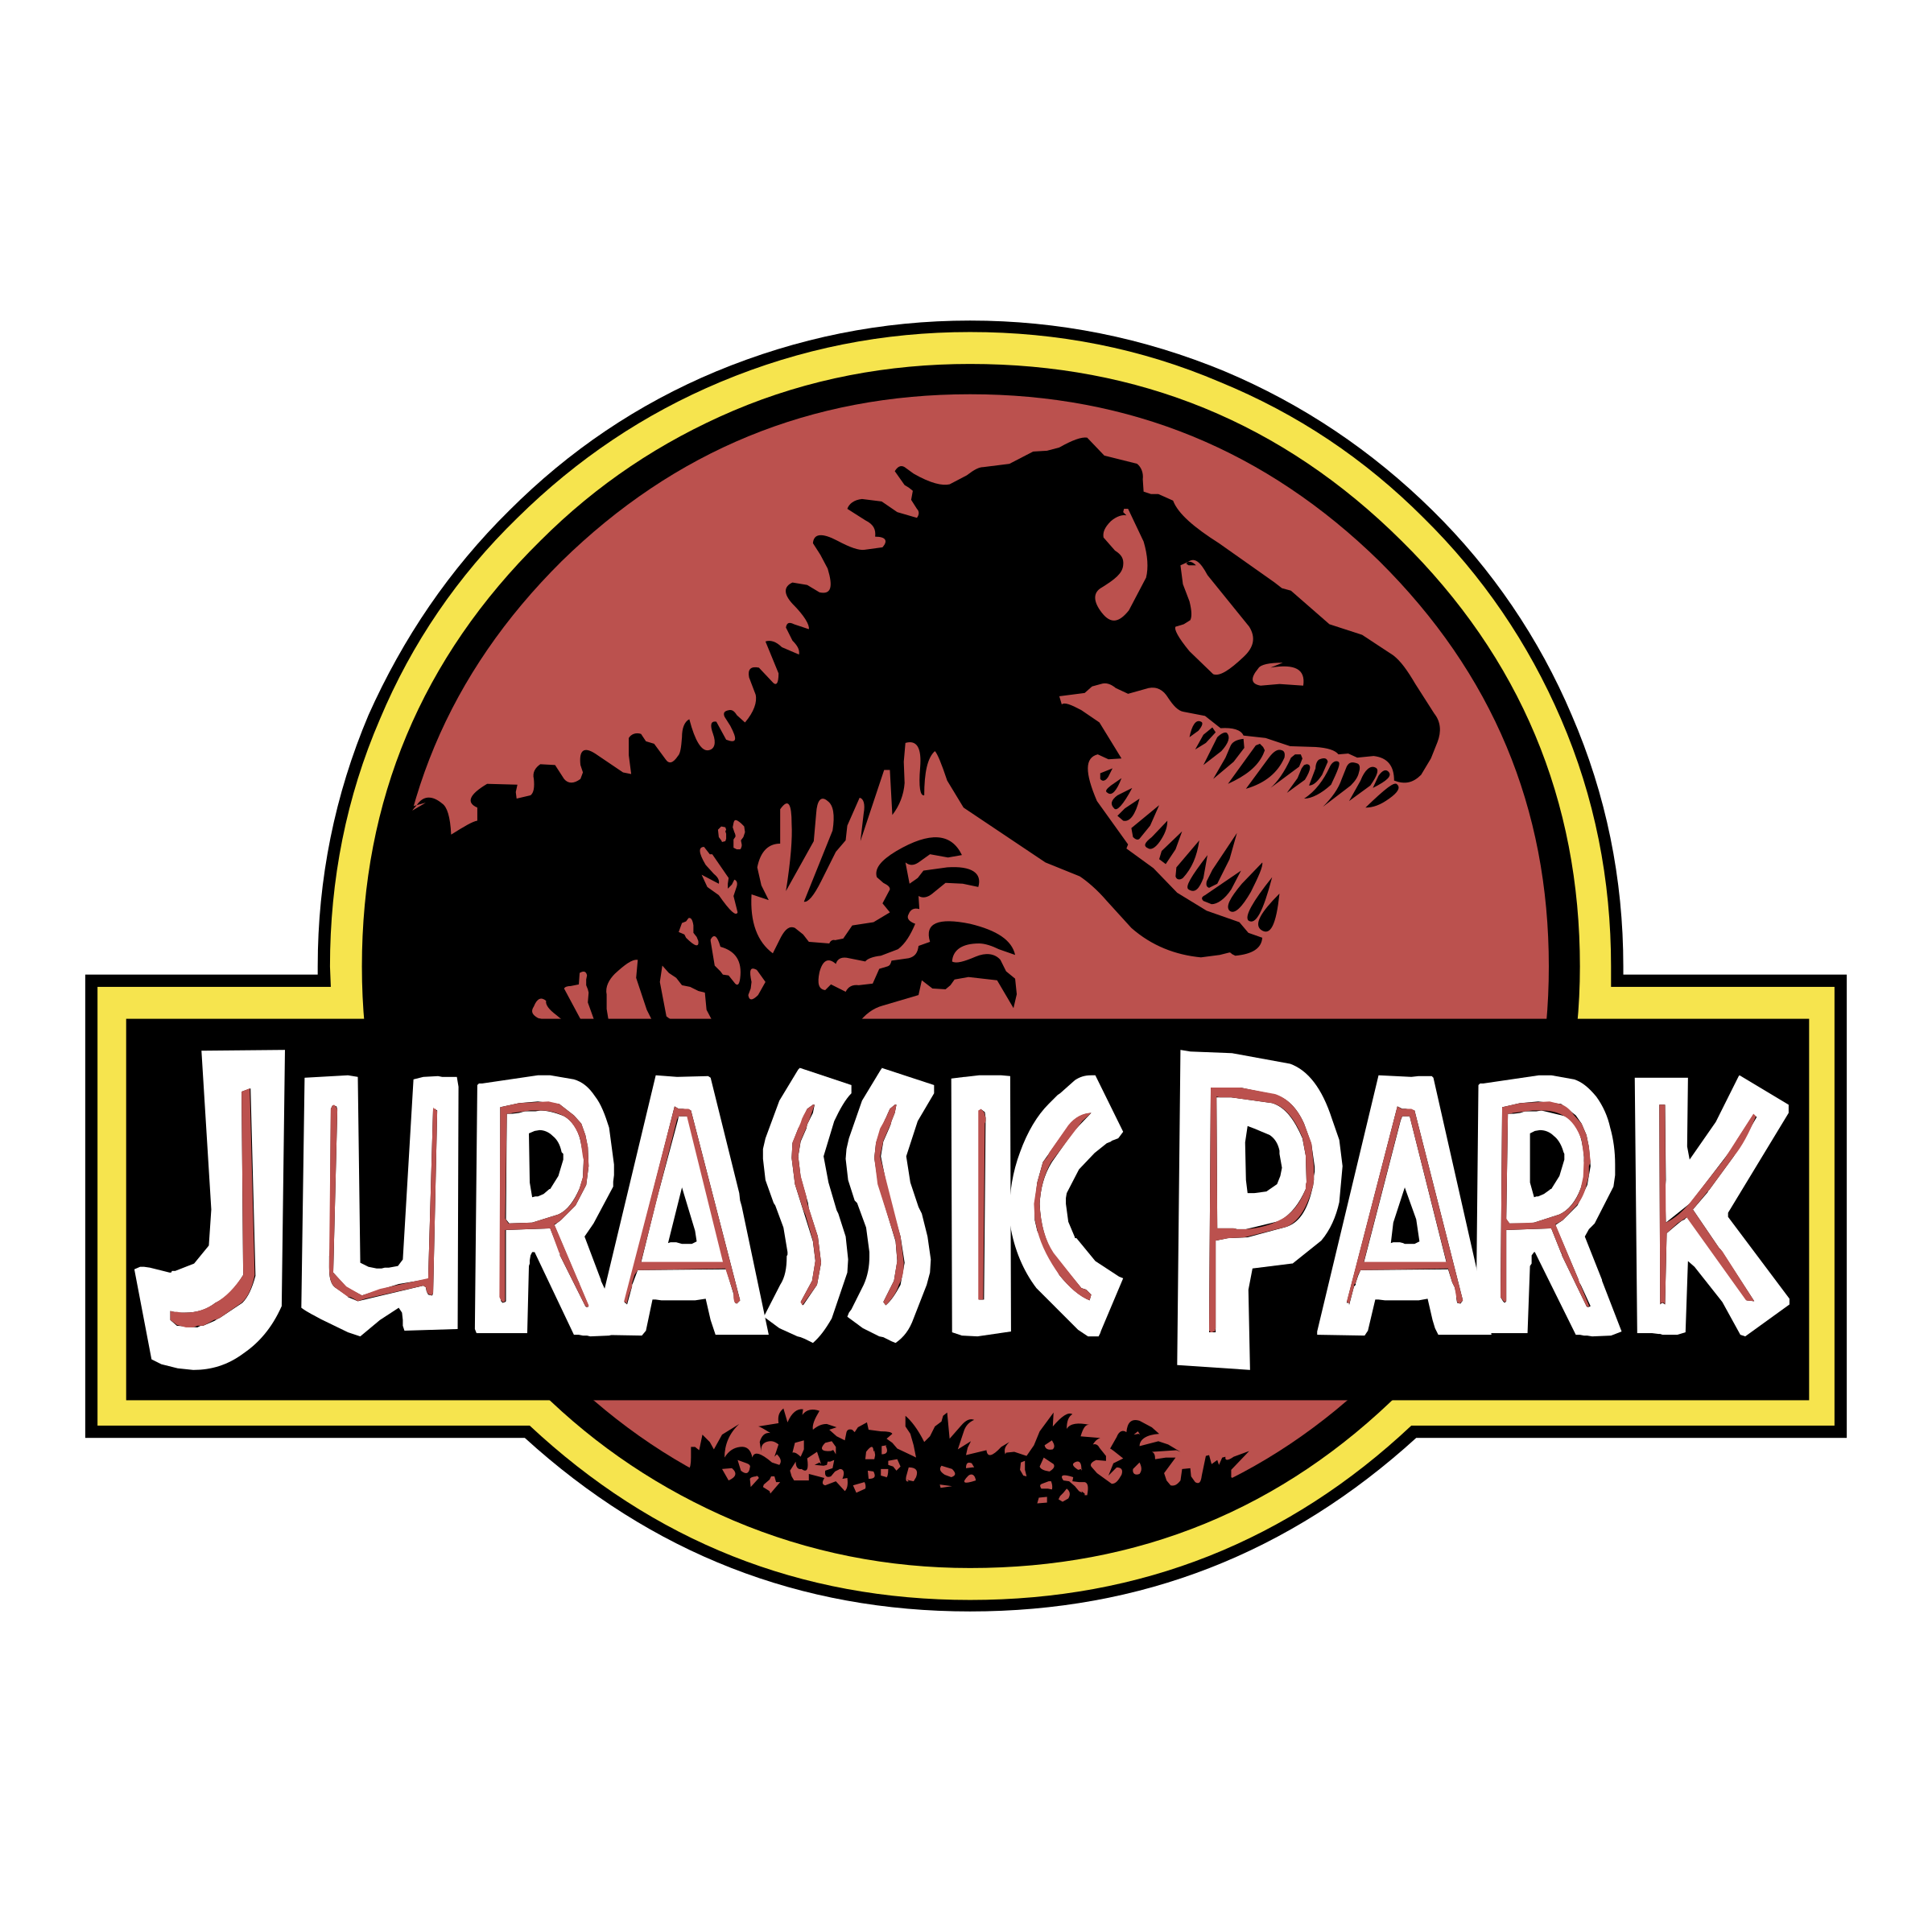 Jurassic Park Logo PNG Free Image